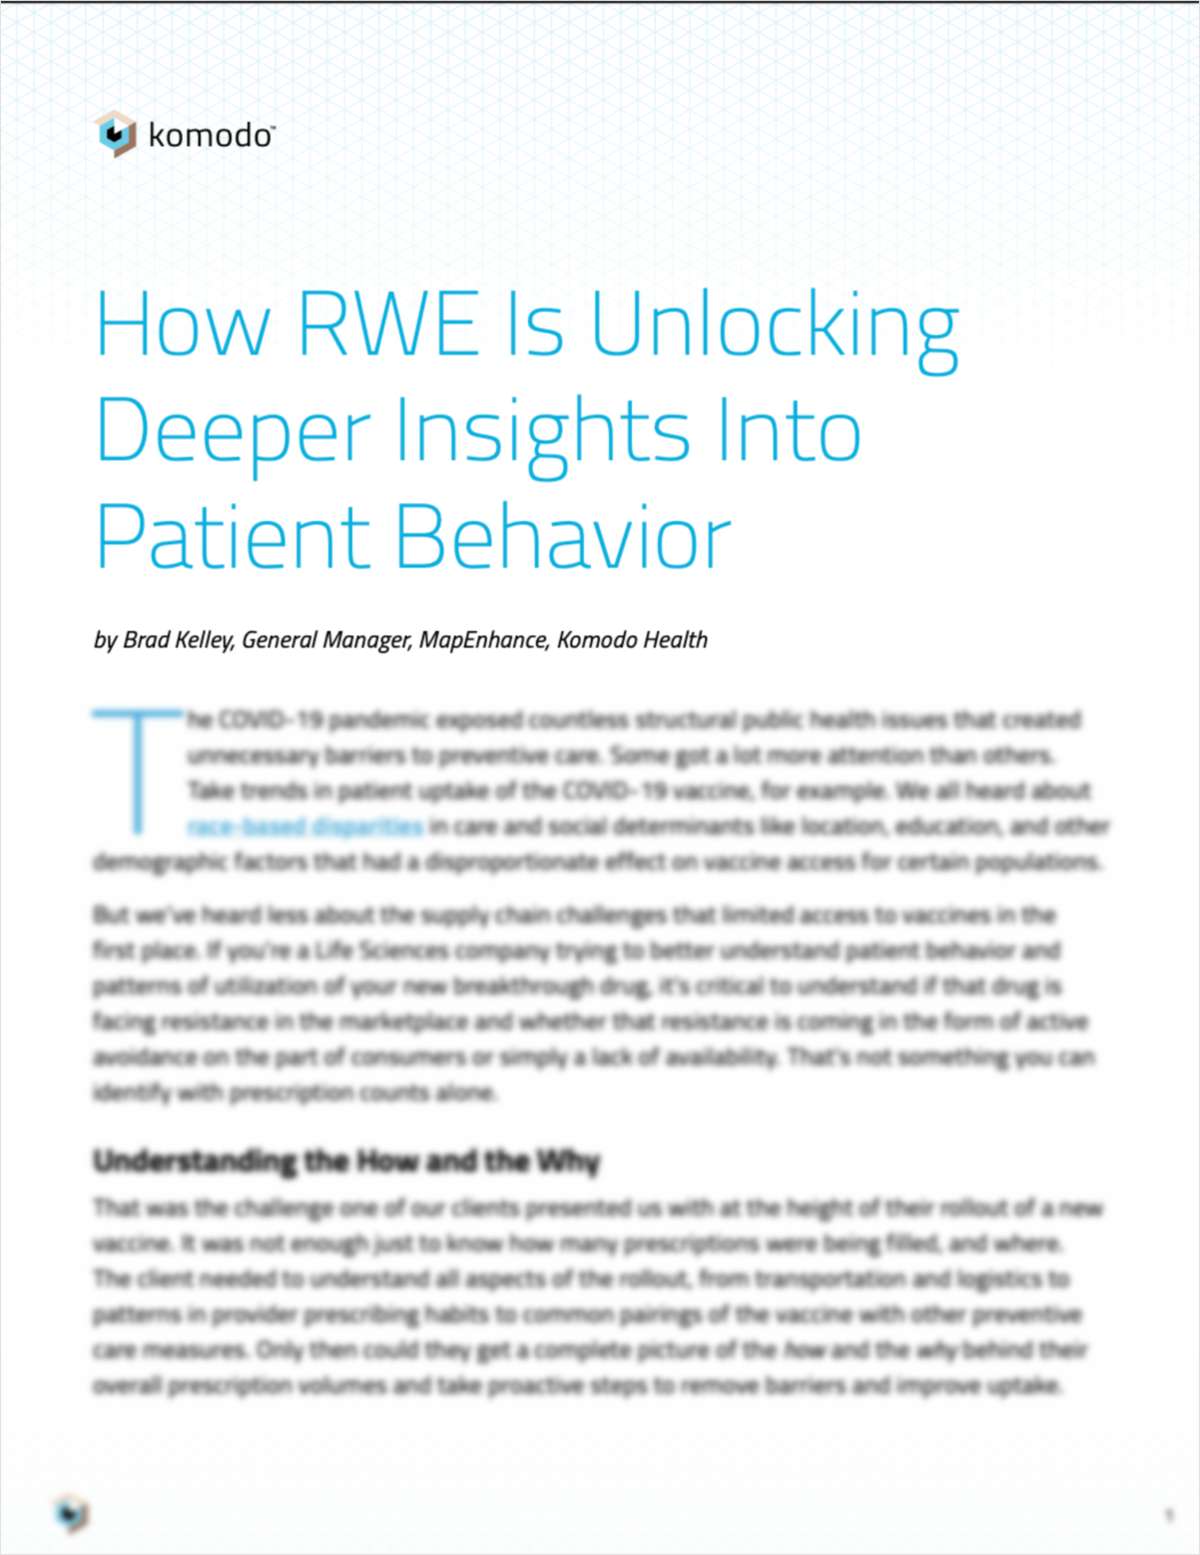 Blog: How RWE Is Unlocking Deeper Insights Into Patient Behavior